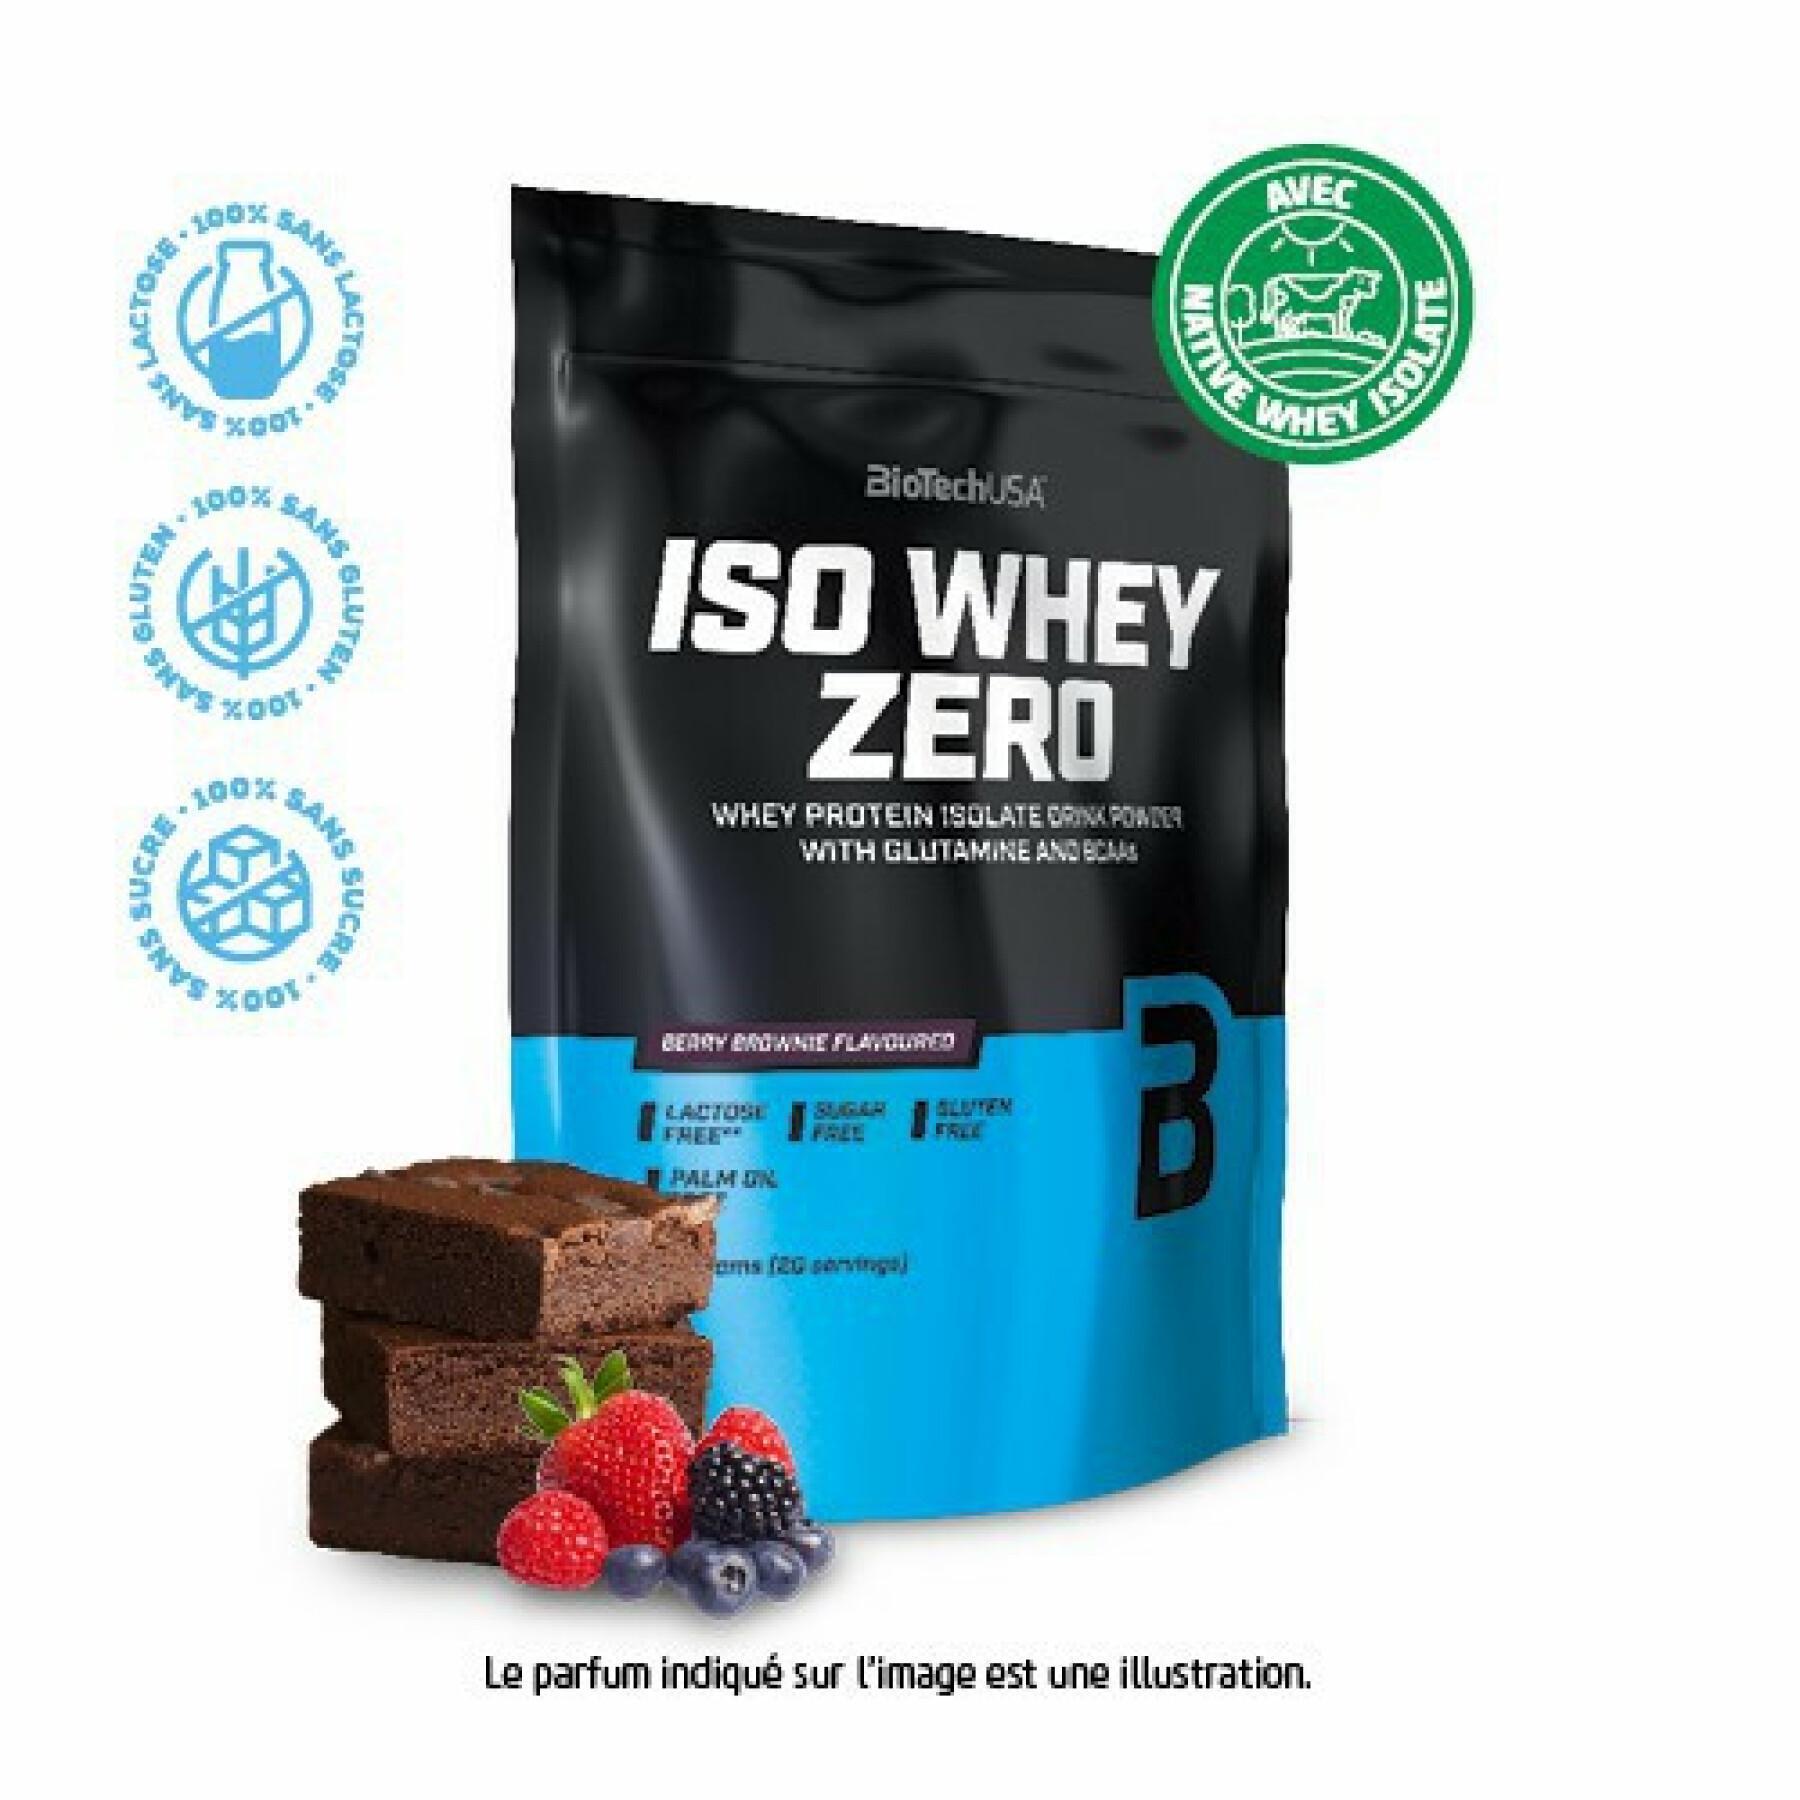 10er Pack Proteinbeutel Biotech USA iso whey zero Laktosefrei - Brownie aux fruits rouges - 500g